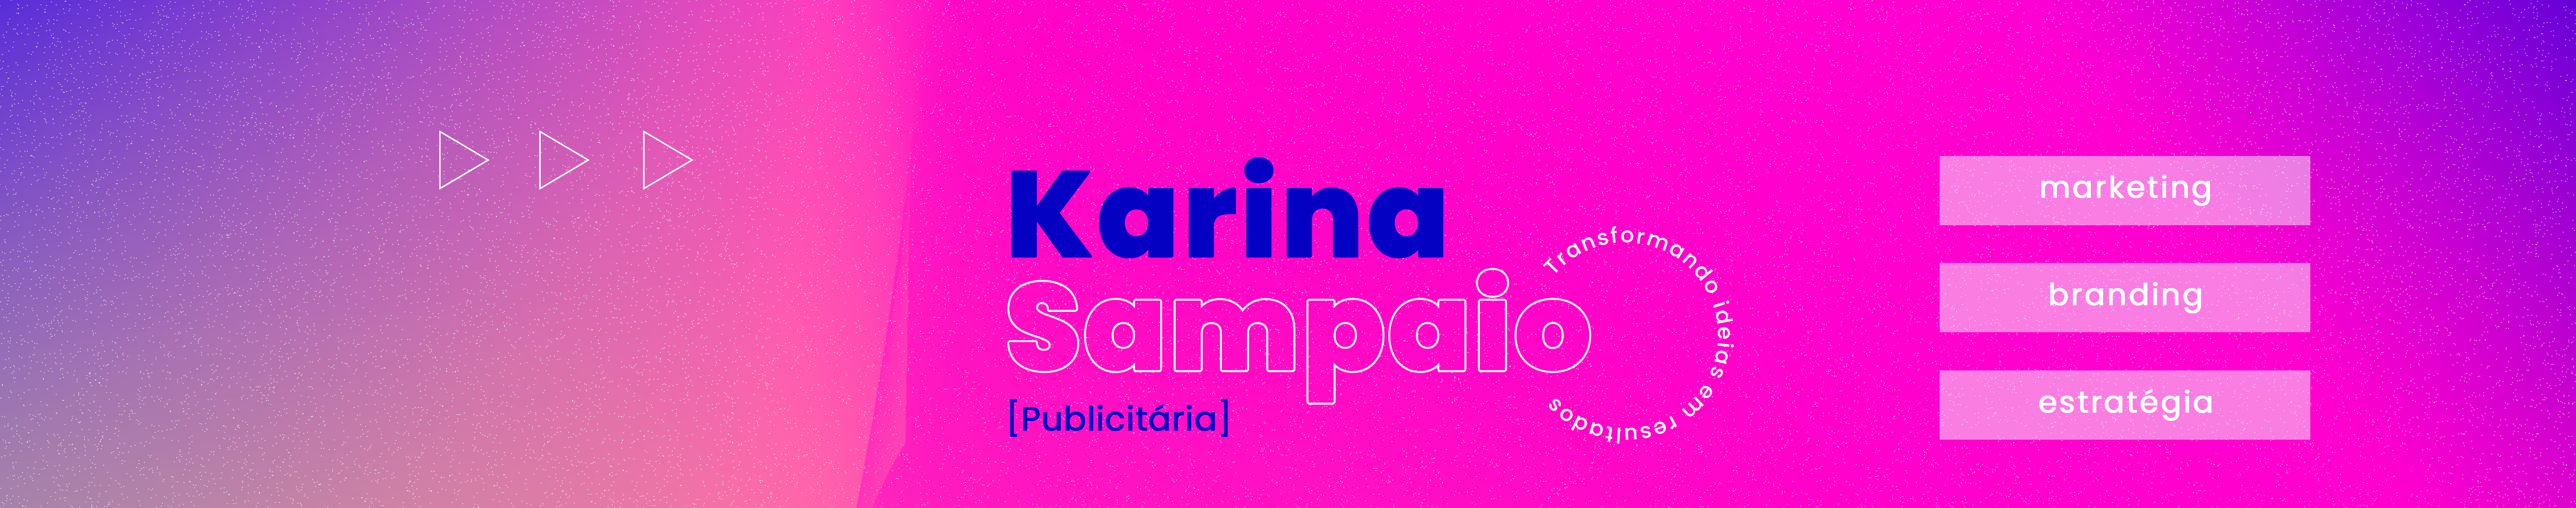 Karina Sampaios profilbanner